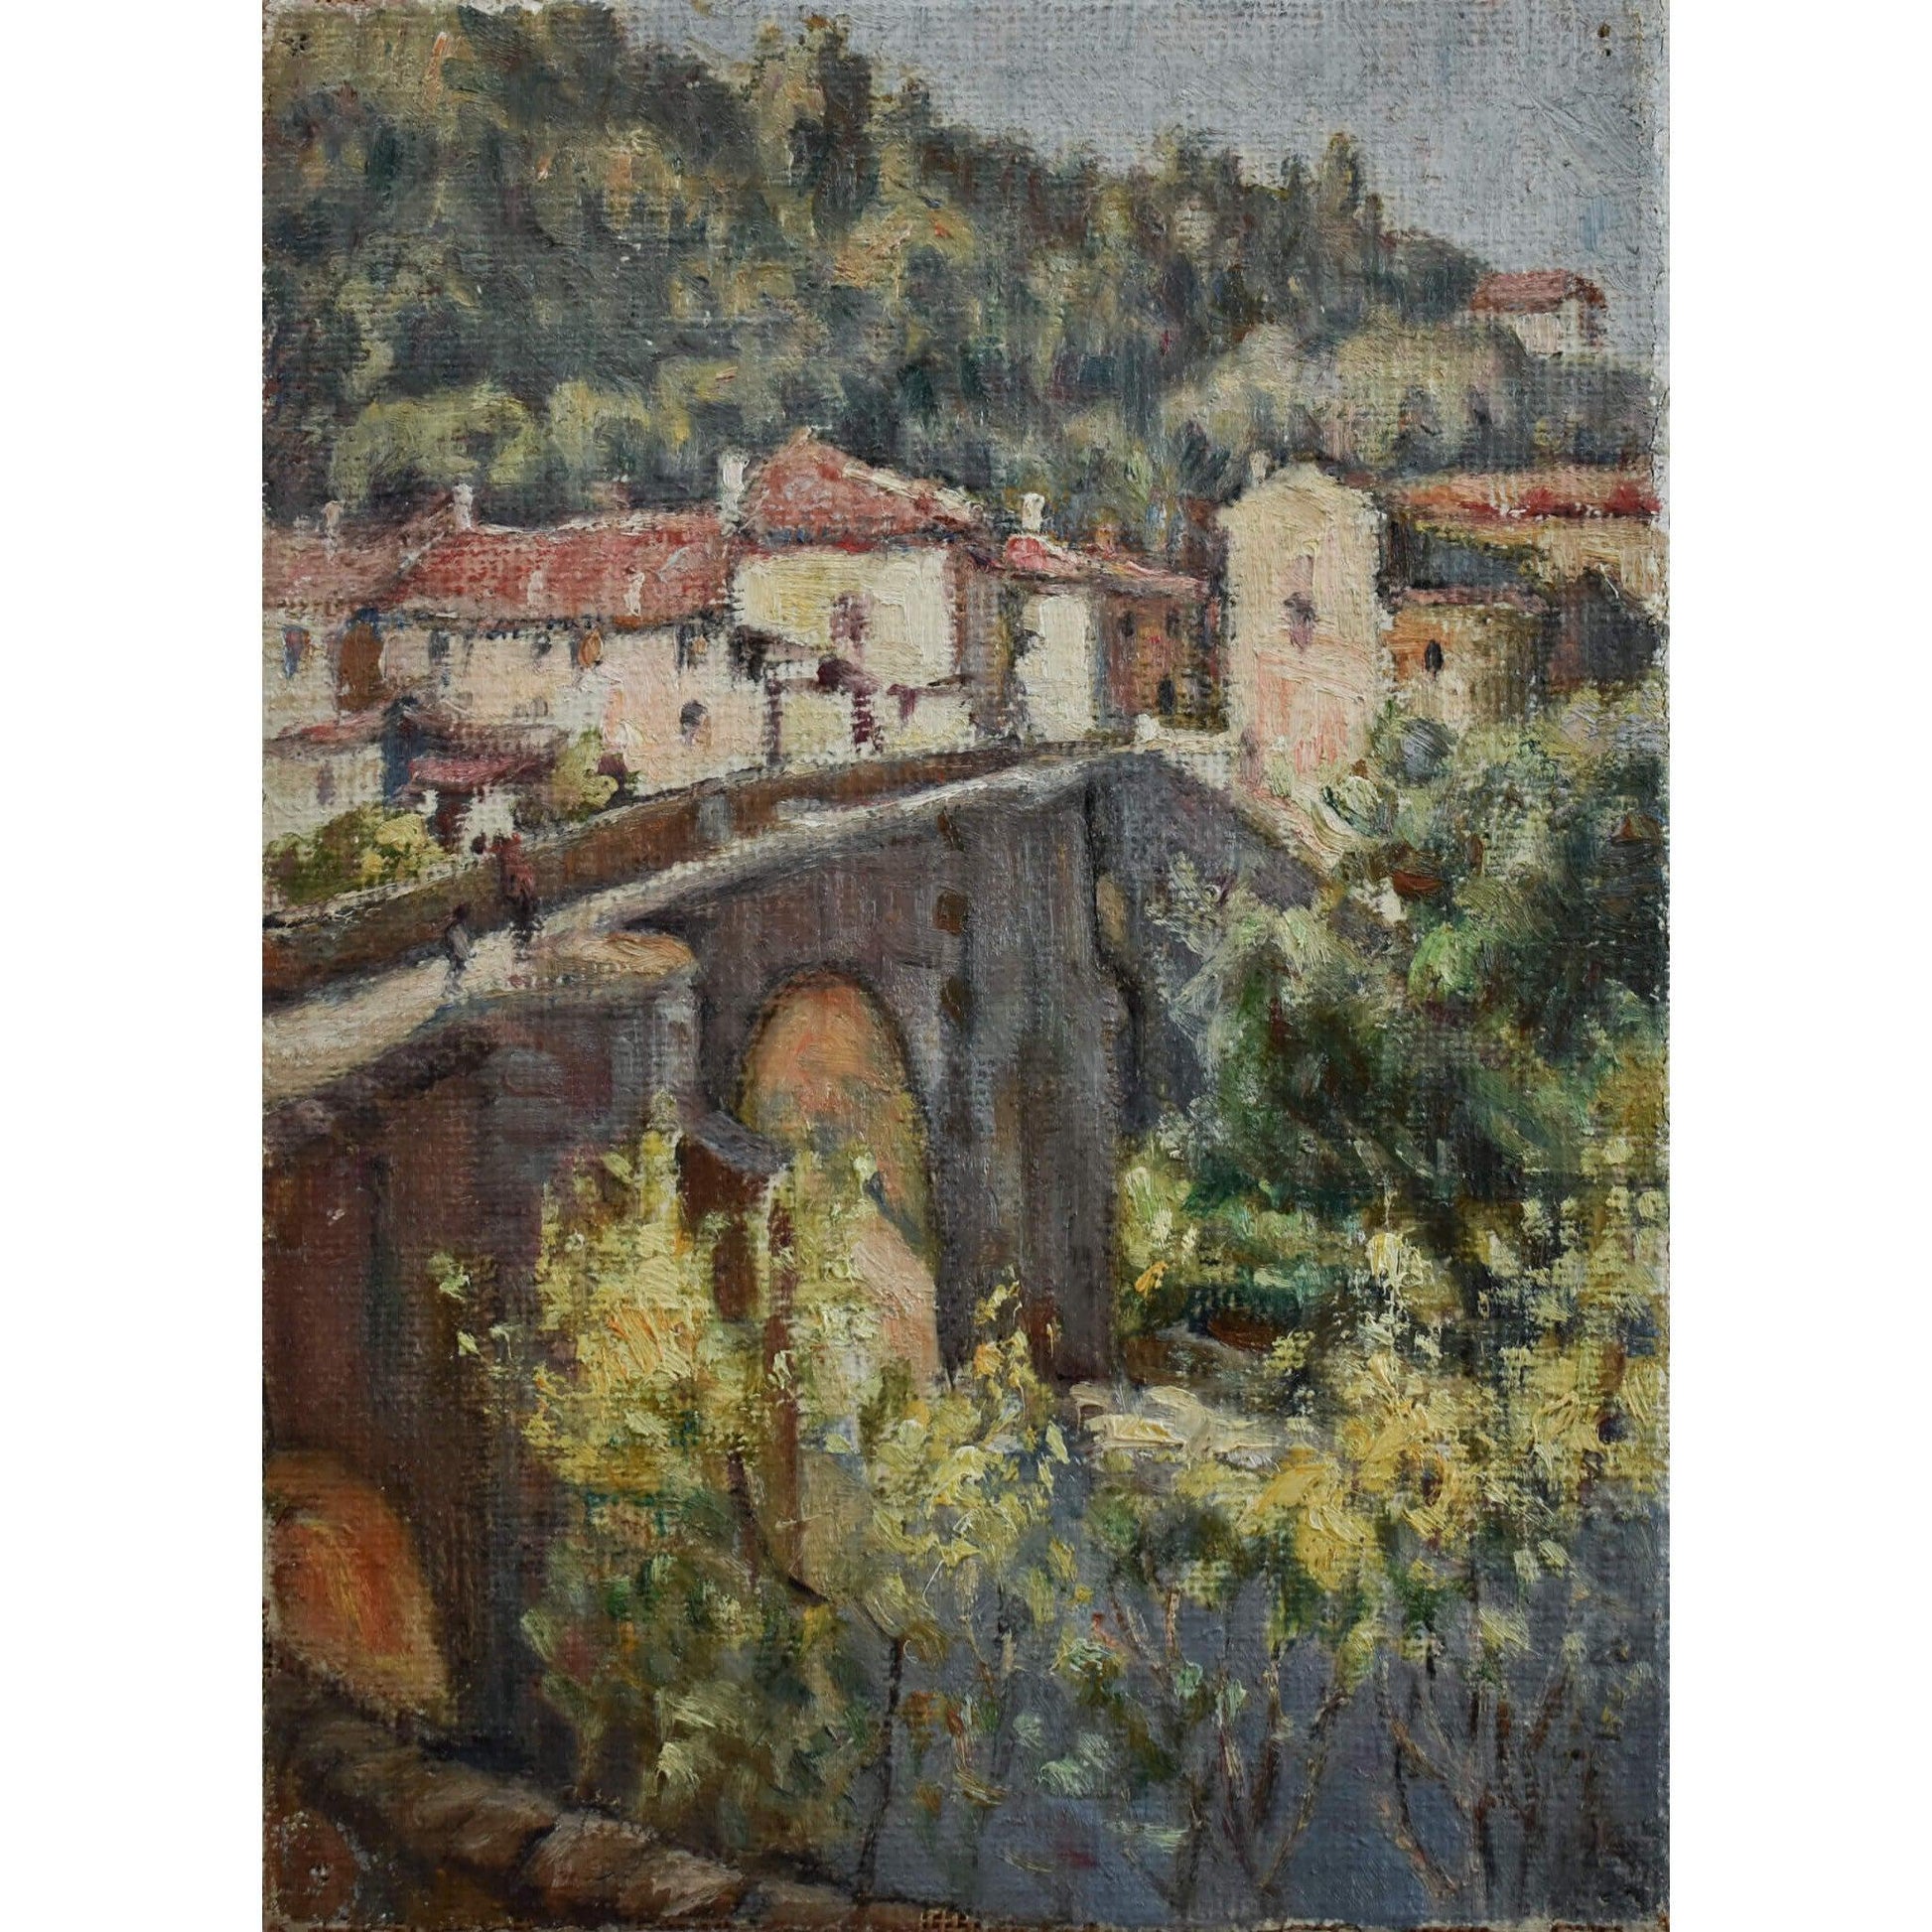 Vintage landscape oil painting impressionist art village view circa 1930 by Jean Galland for sale at Winckelmann Gallery